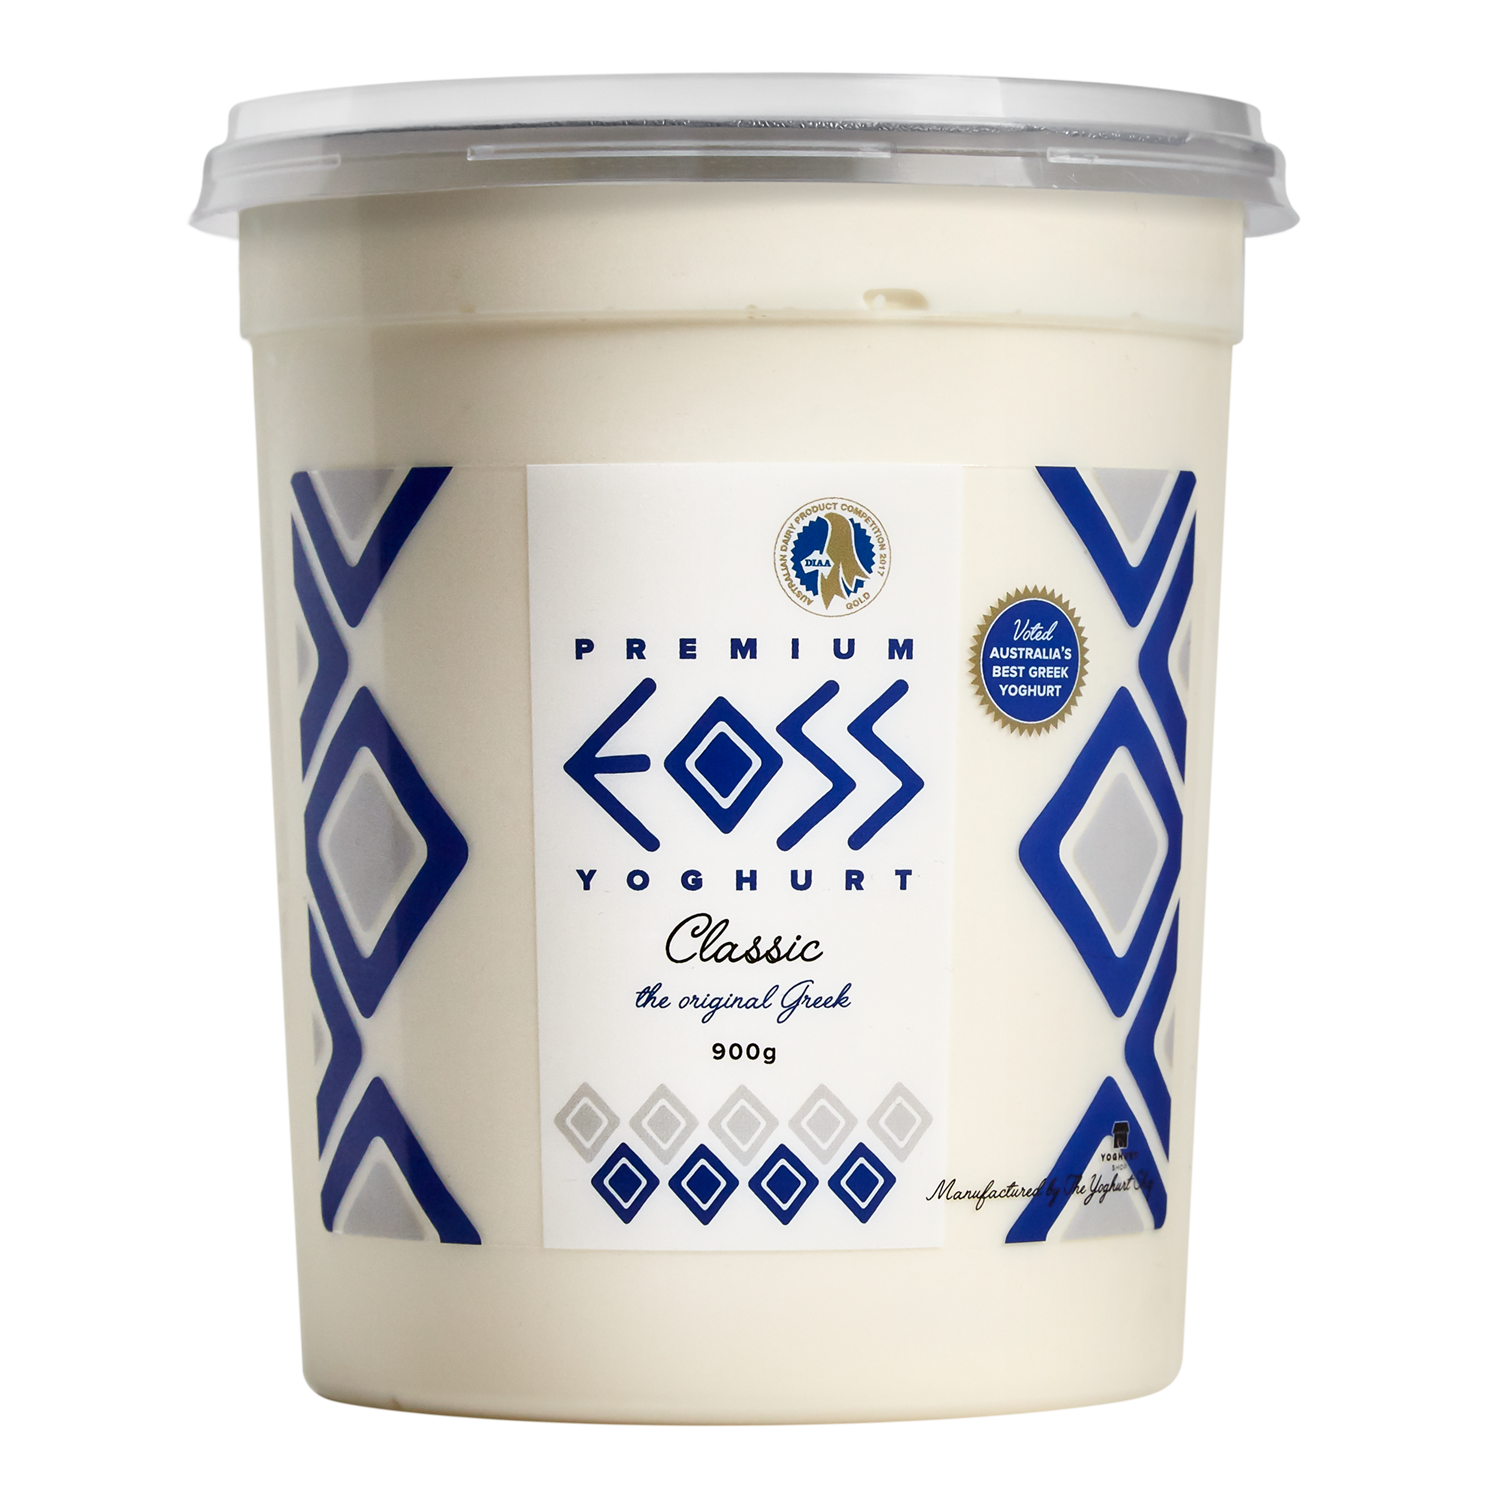 EOSS Yoghurt Classic Tub 900g